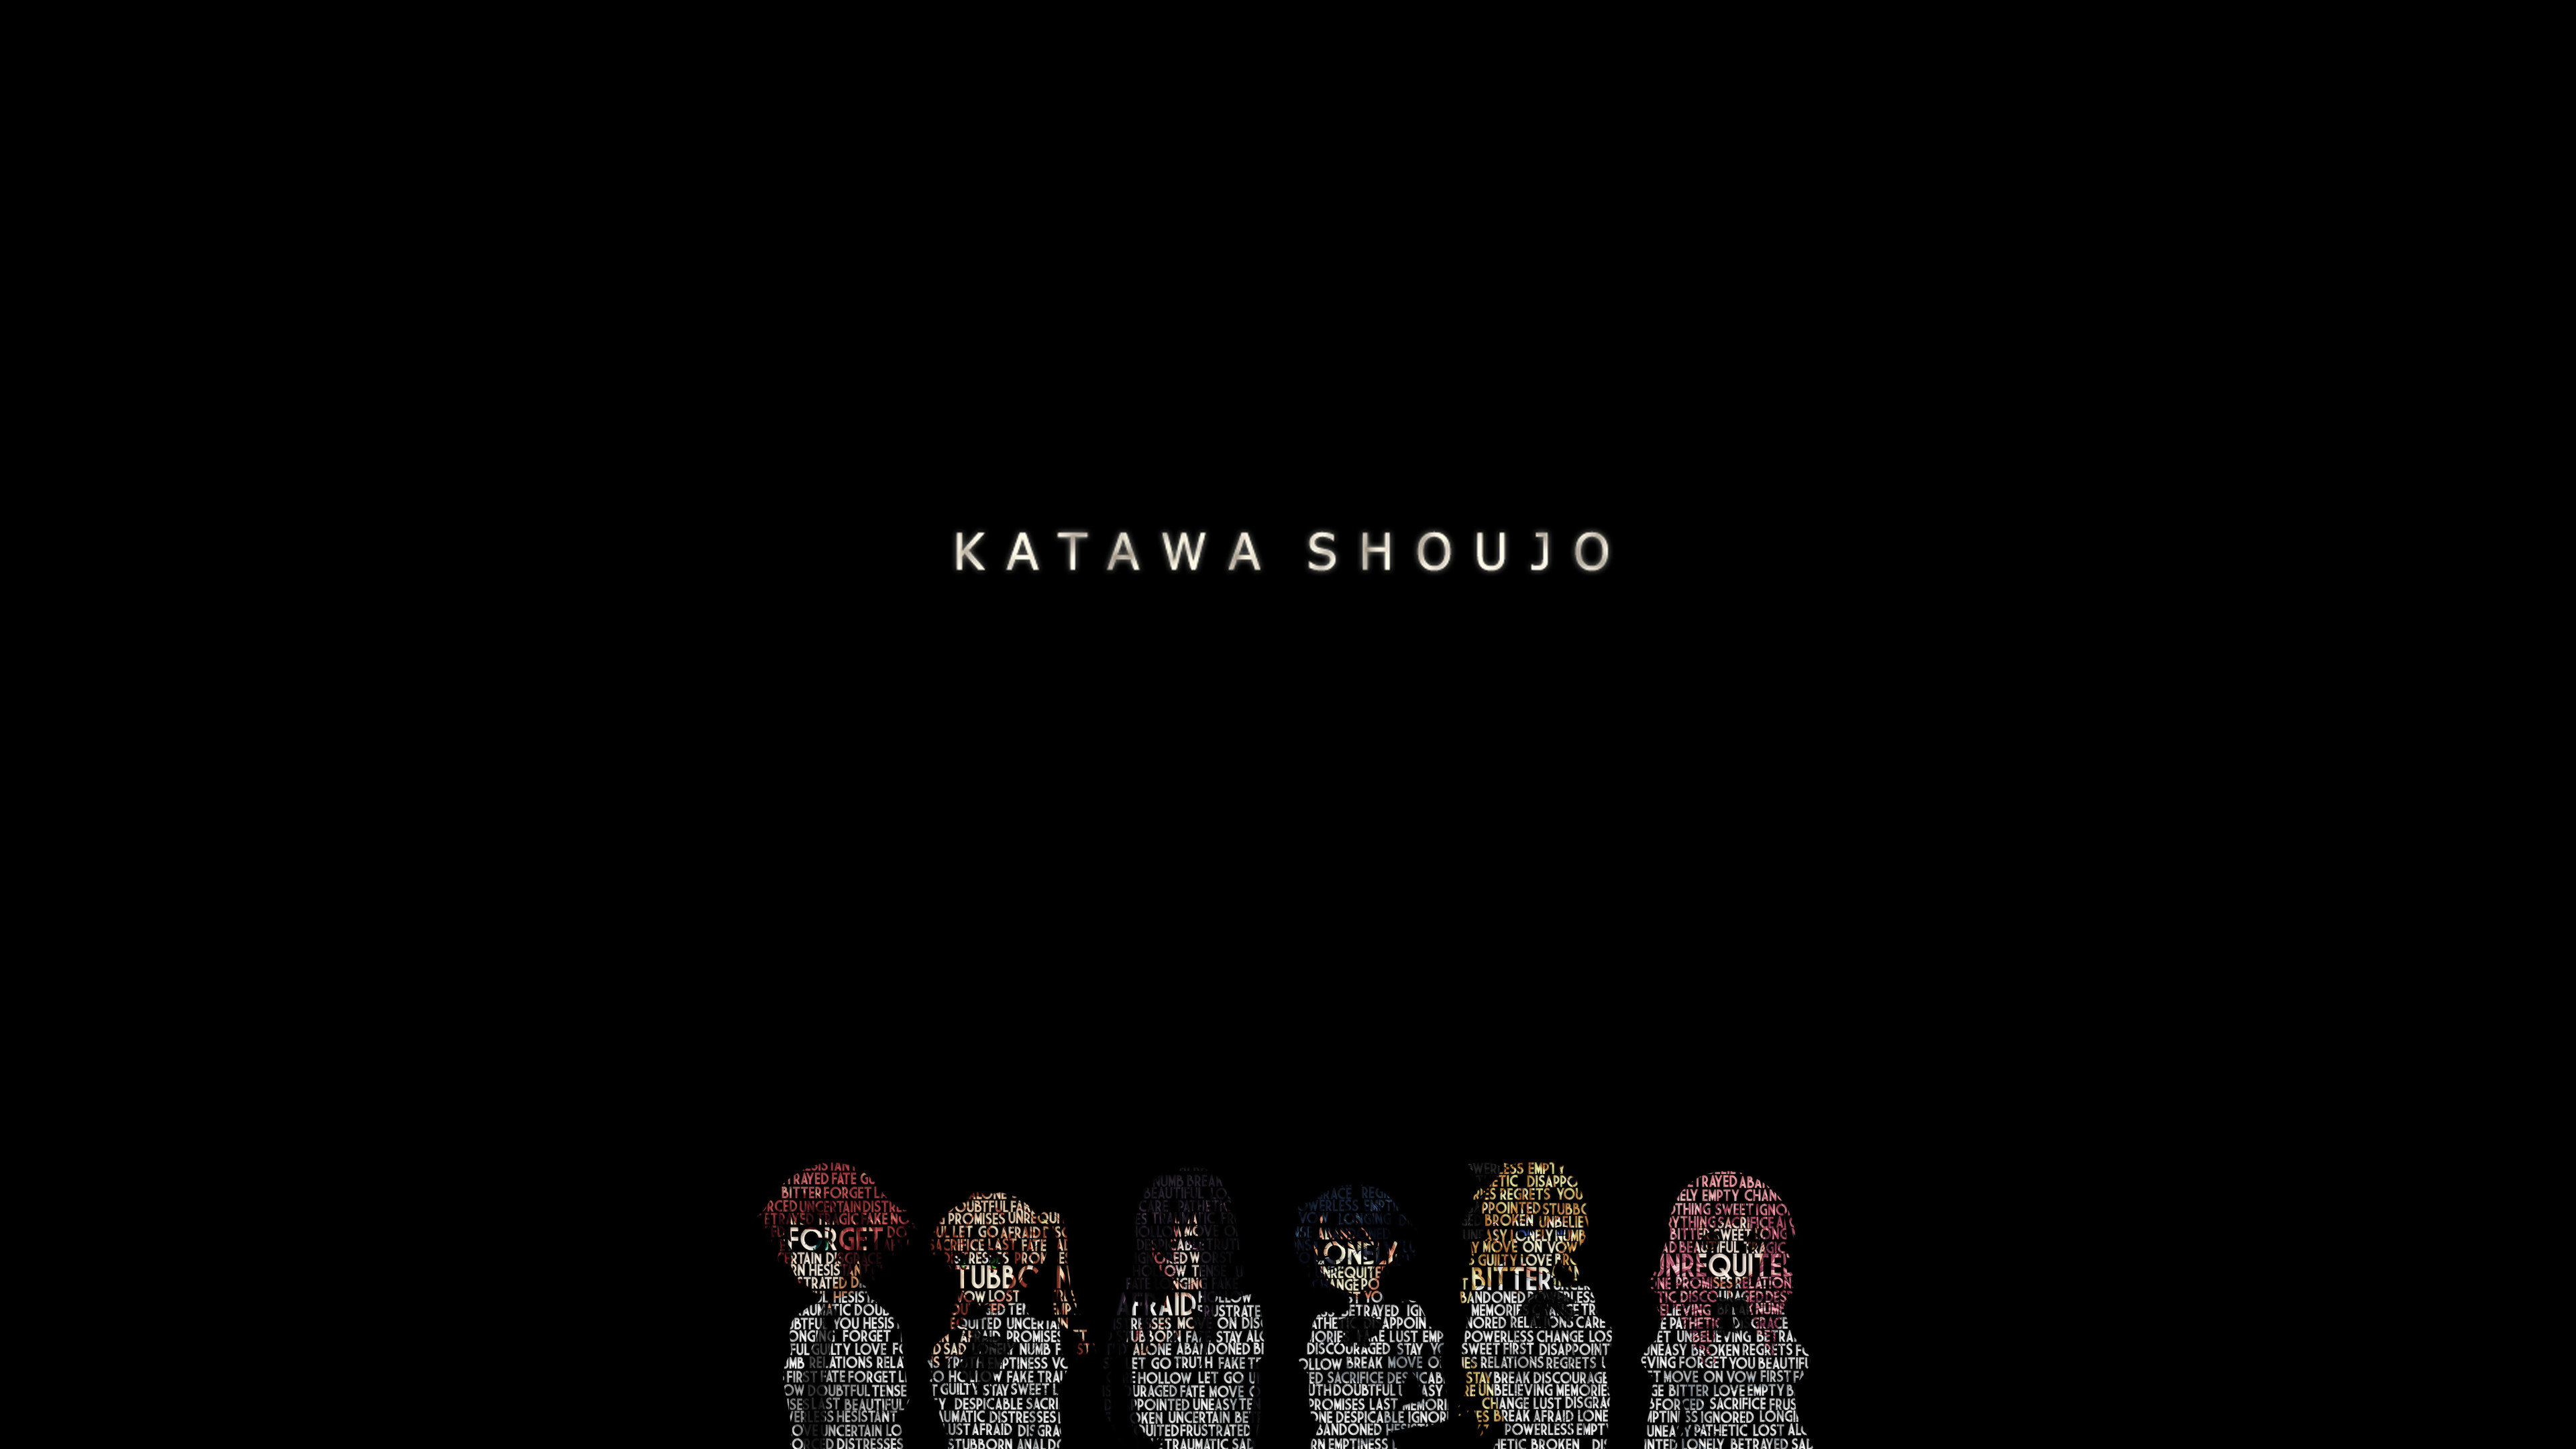 Free download Katawa Shoujo wallpaper ID:101072 uhd 4k for desktop